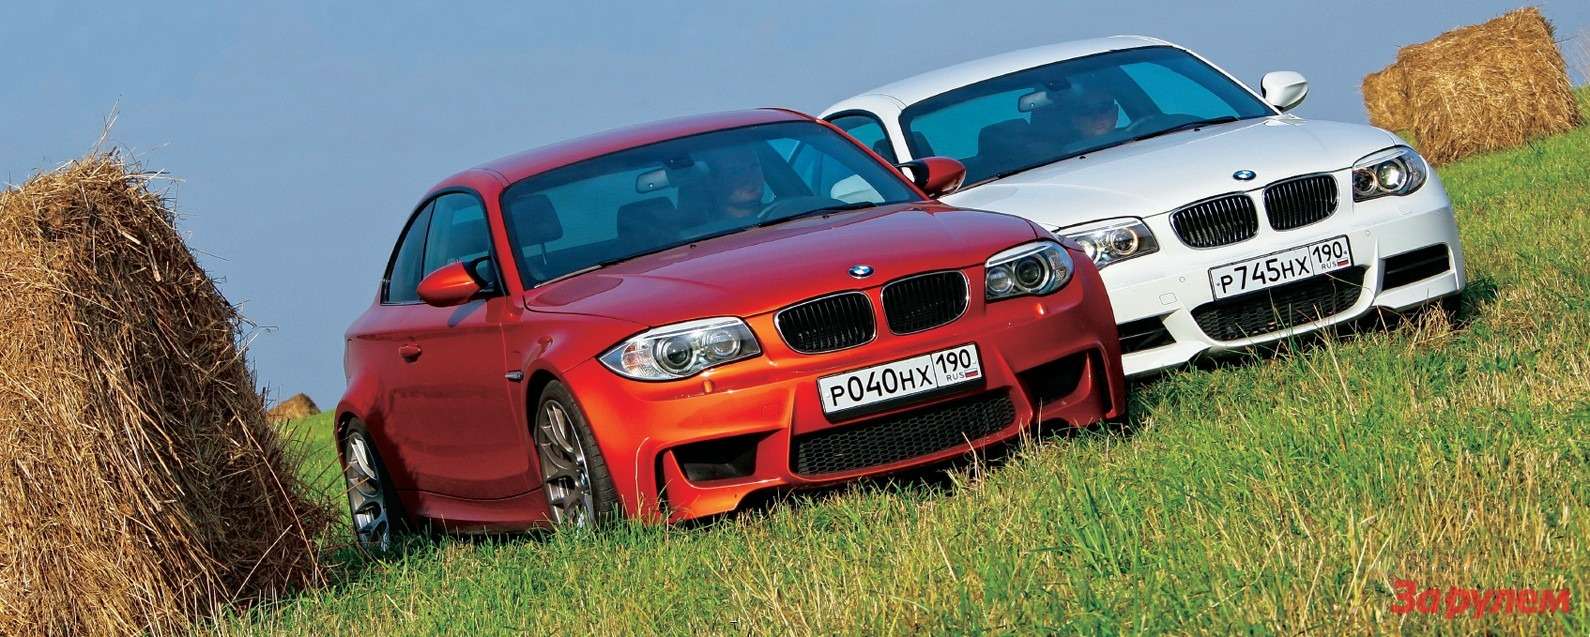 BMW 1 Series M coupe, BMW 135i